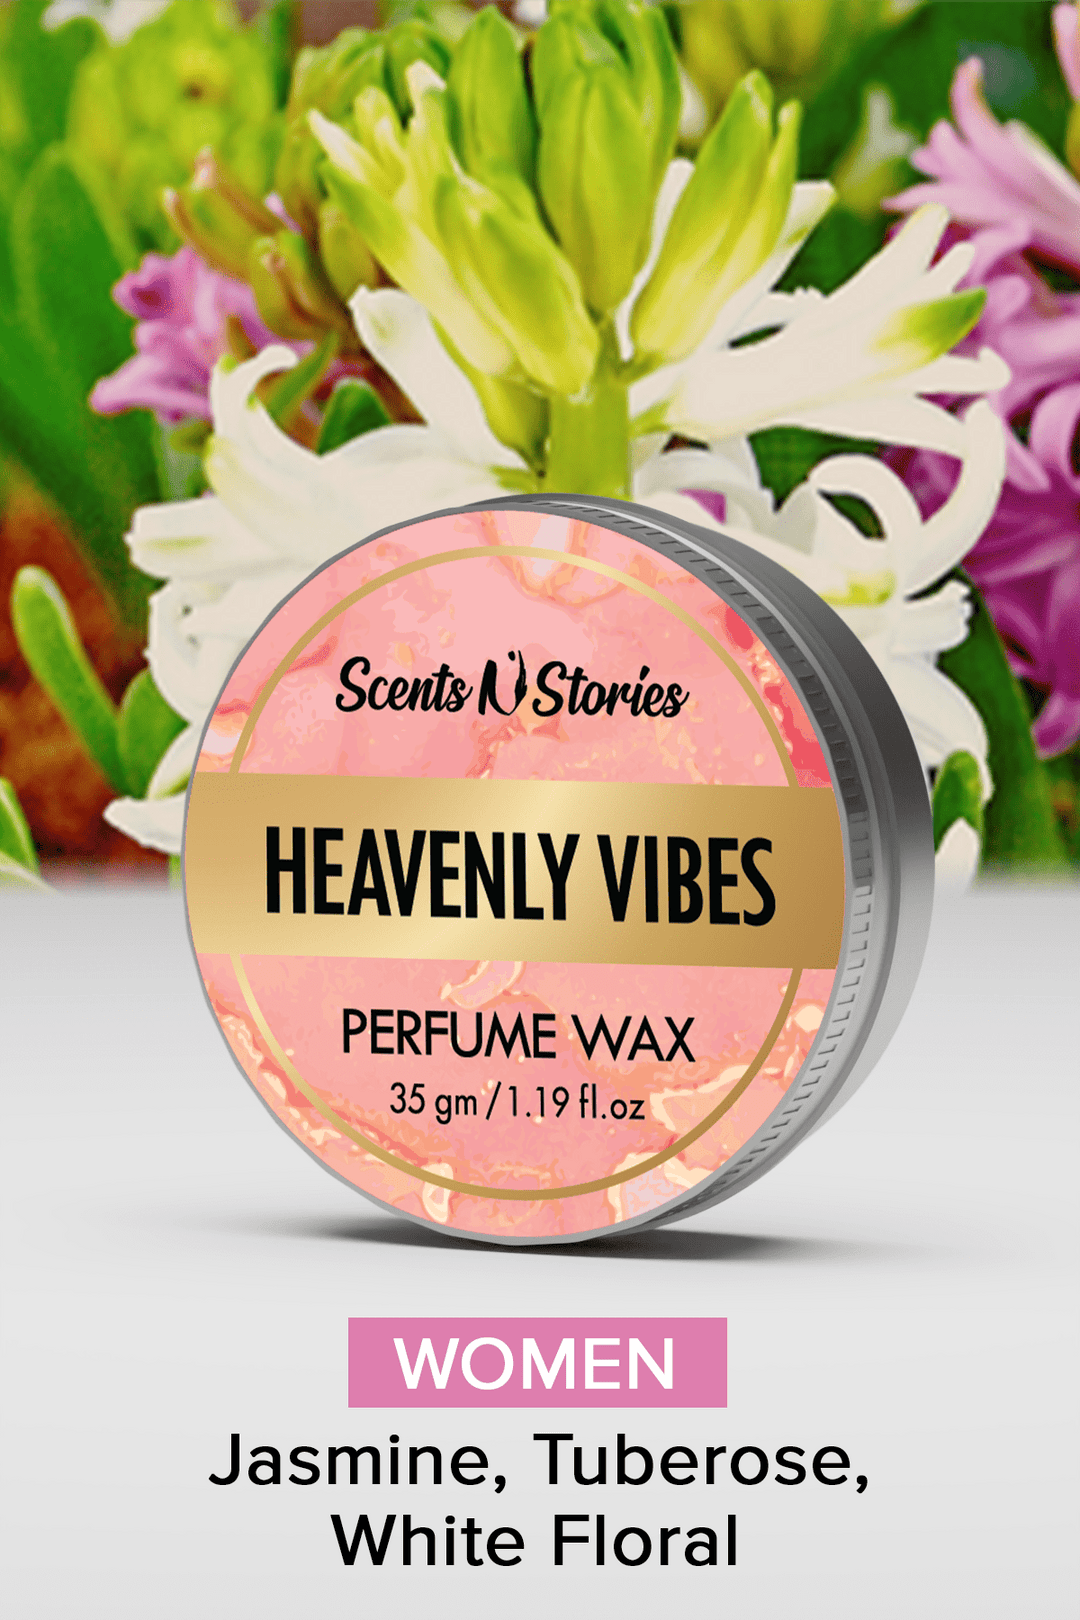 heavenly vibes perfume wax